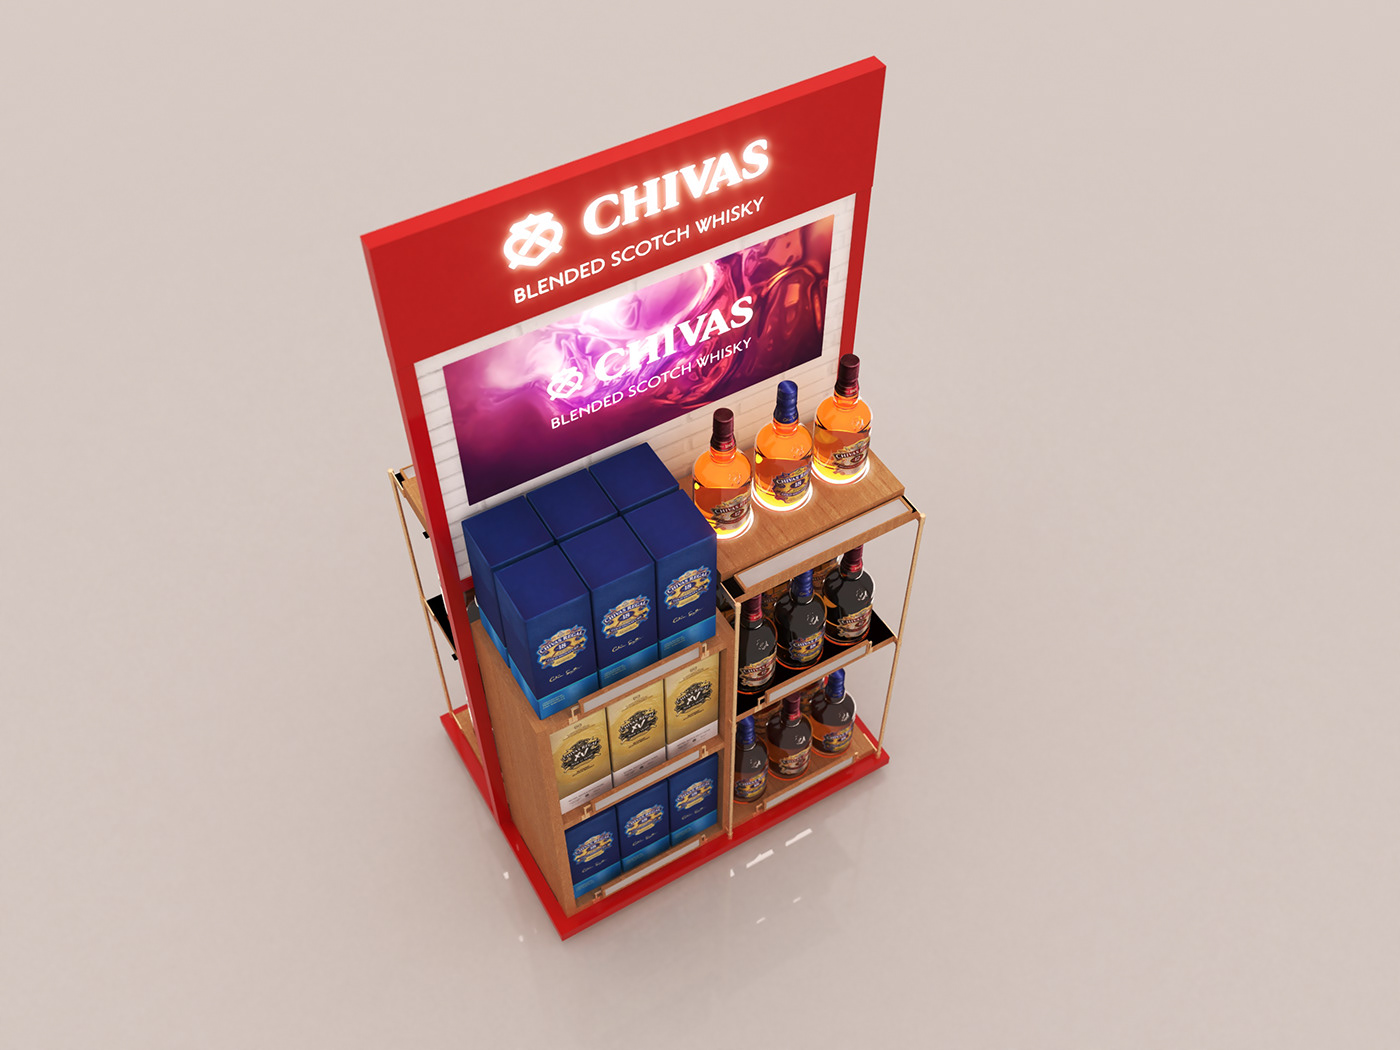 chivas Display FSU liquor marketing   posm regal